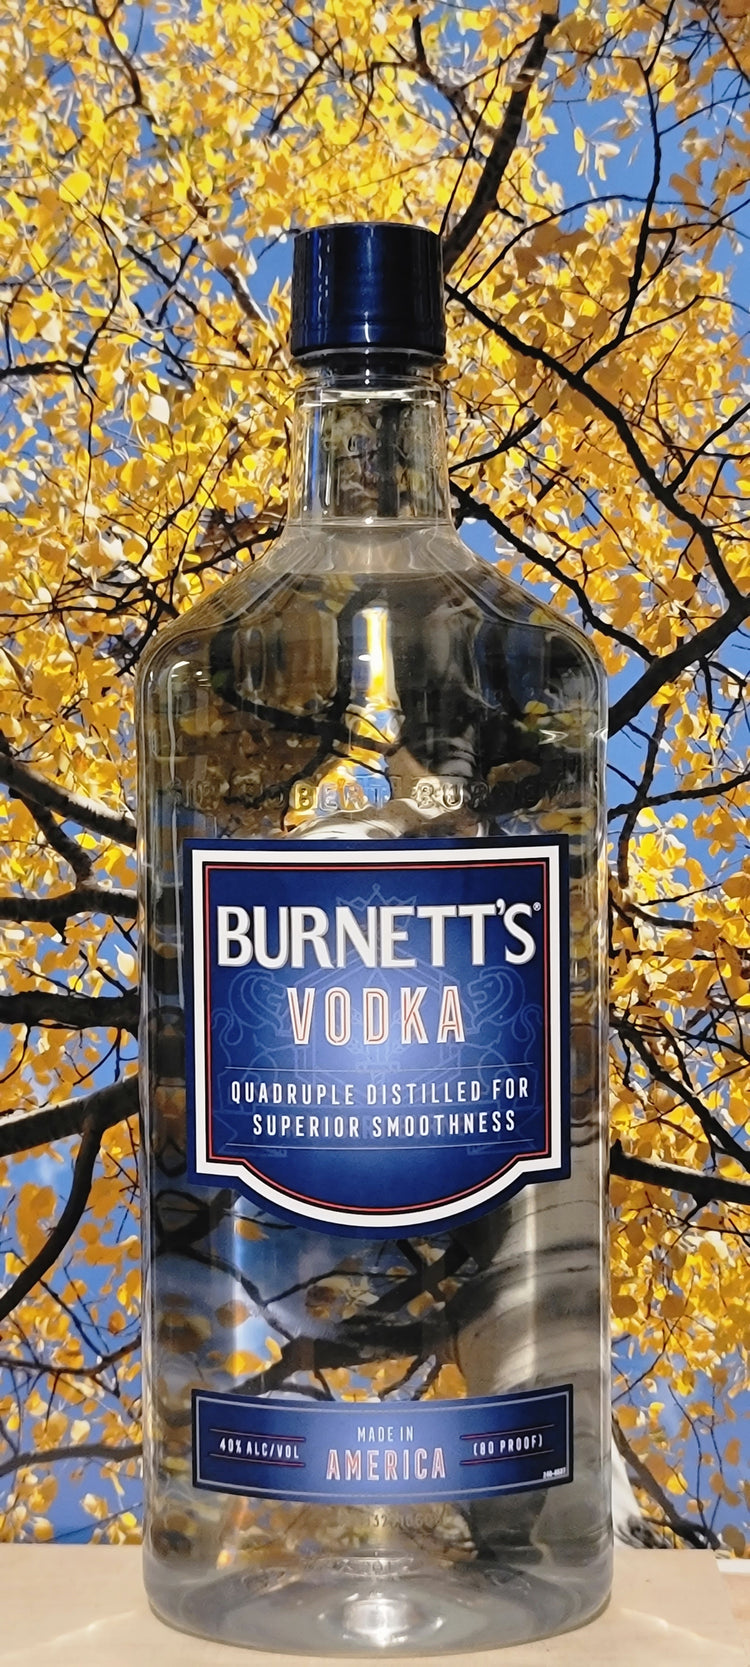 Burnett's vodka